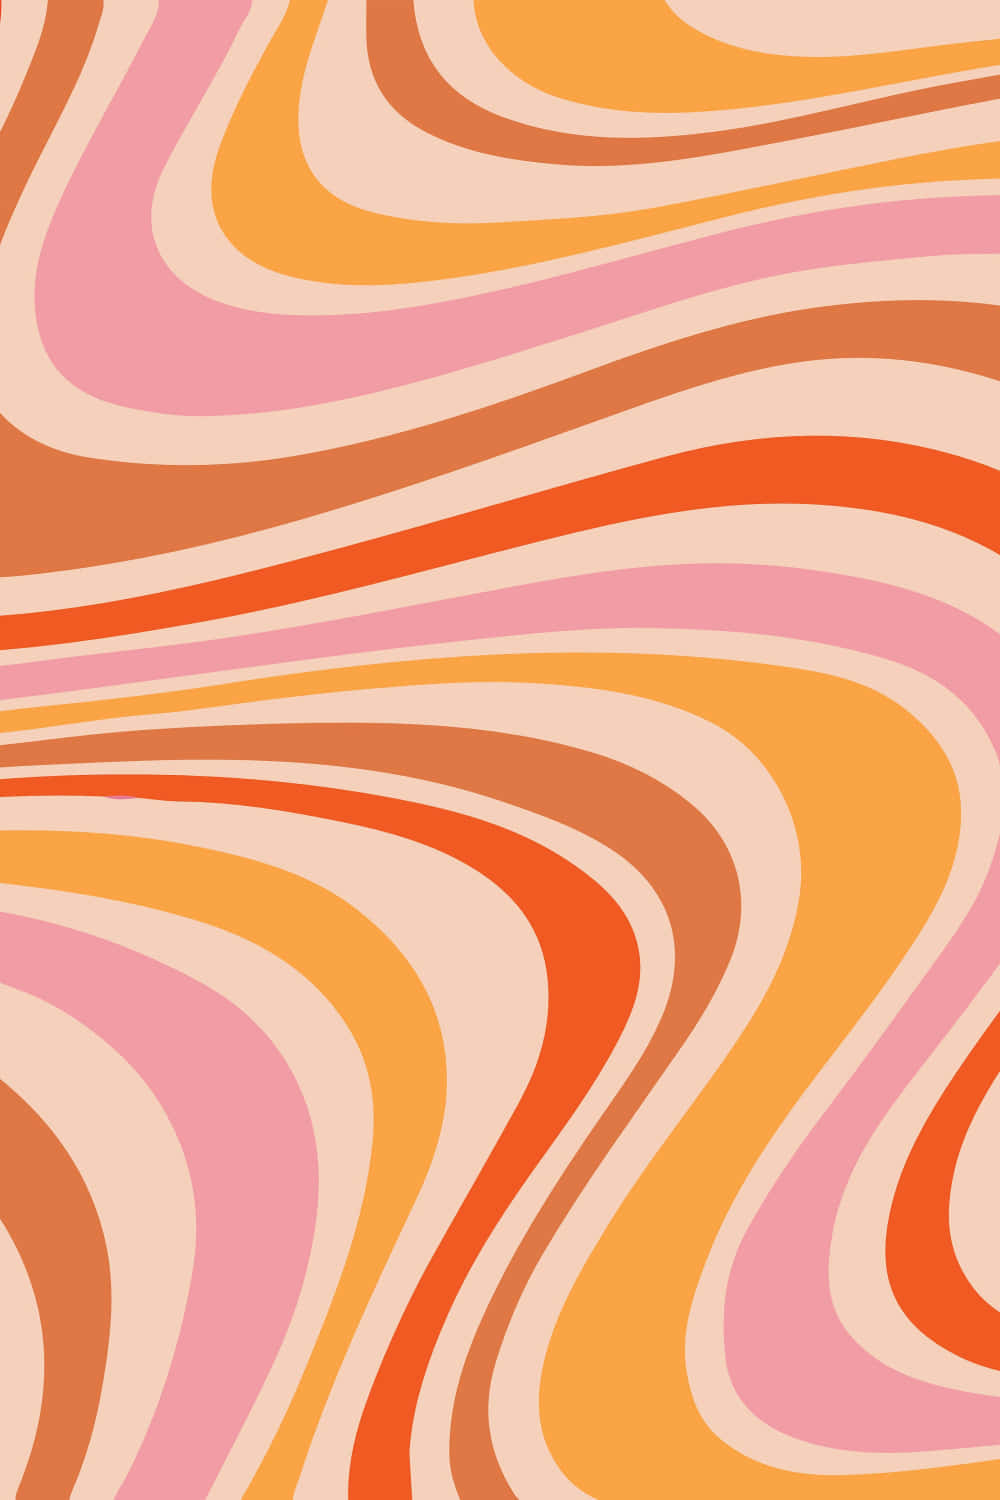 A Pink And Orange Wavy Pattern